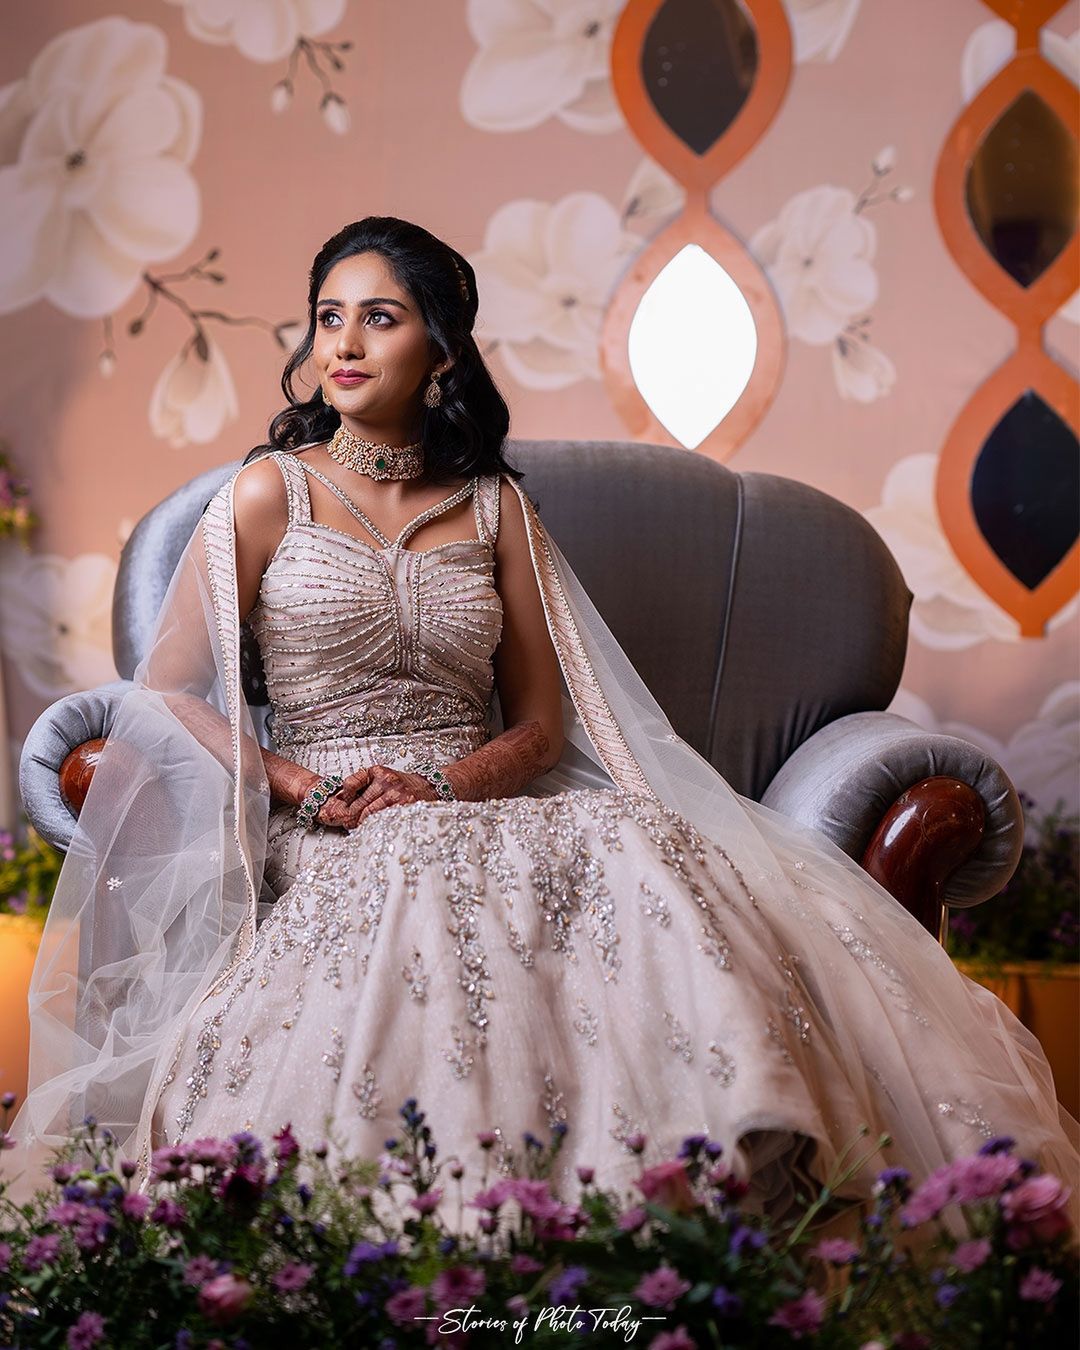 Capturing Eternal Love: Sukant & Amrita's Breathtaking Bridal Photoshoot